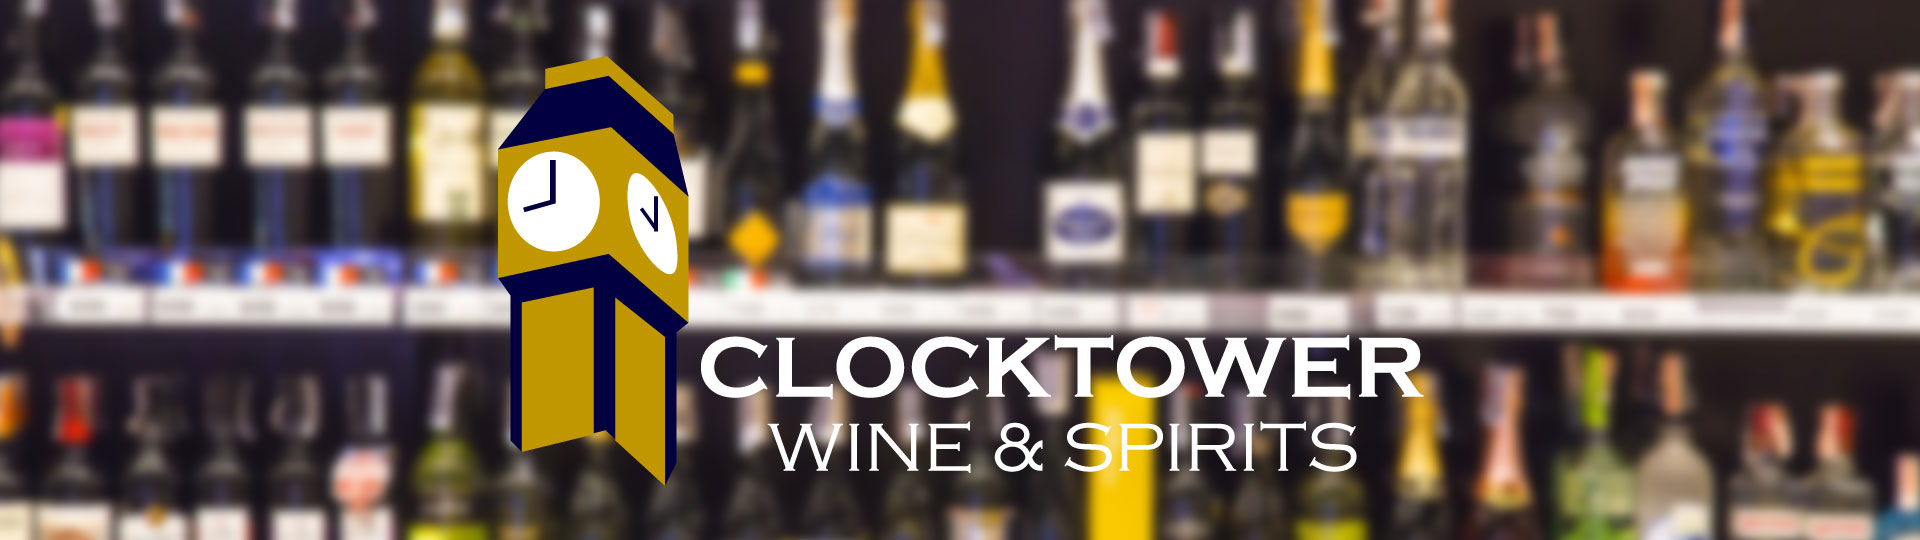 Clocktower Wine & Spirits